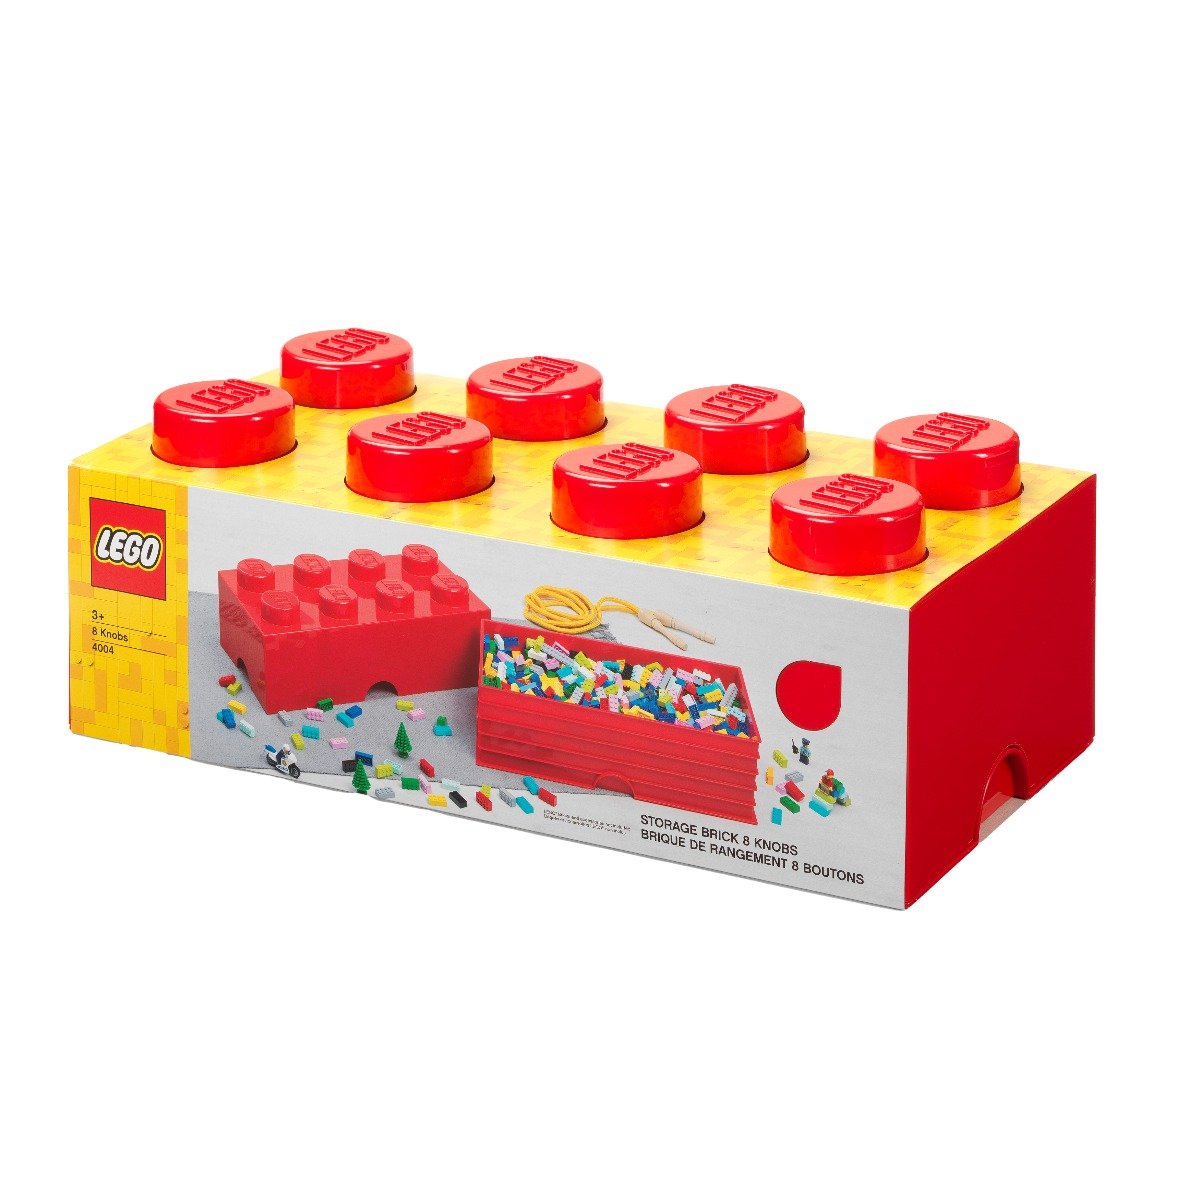 Cutie depozitare Lego, cu 8 pini, Rosu constructie